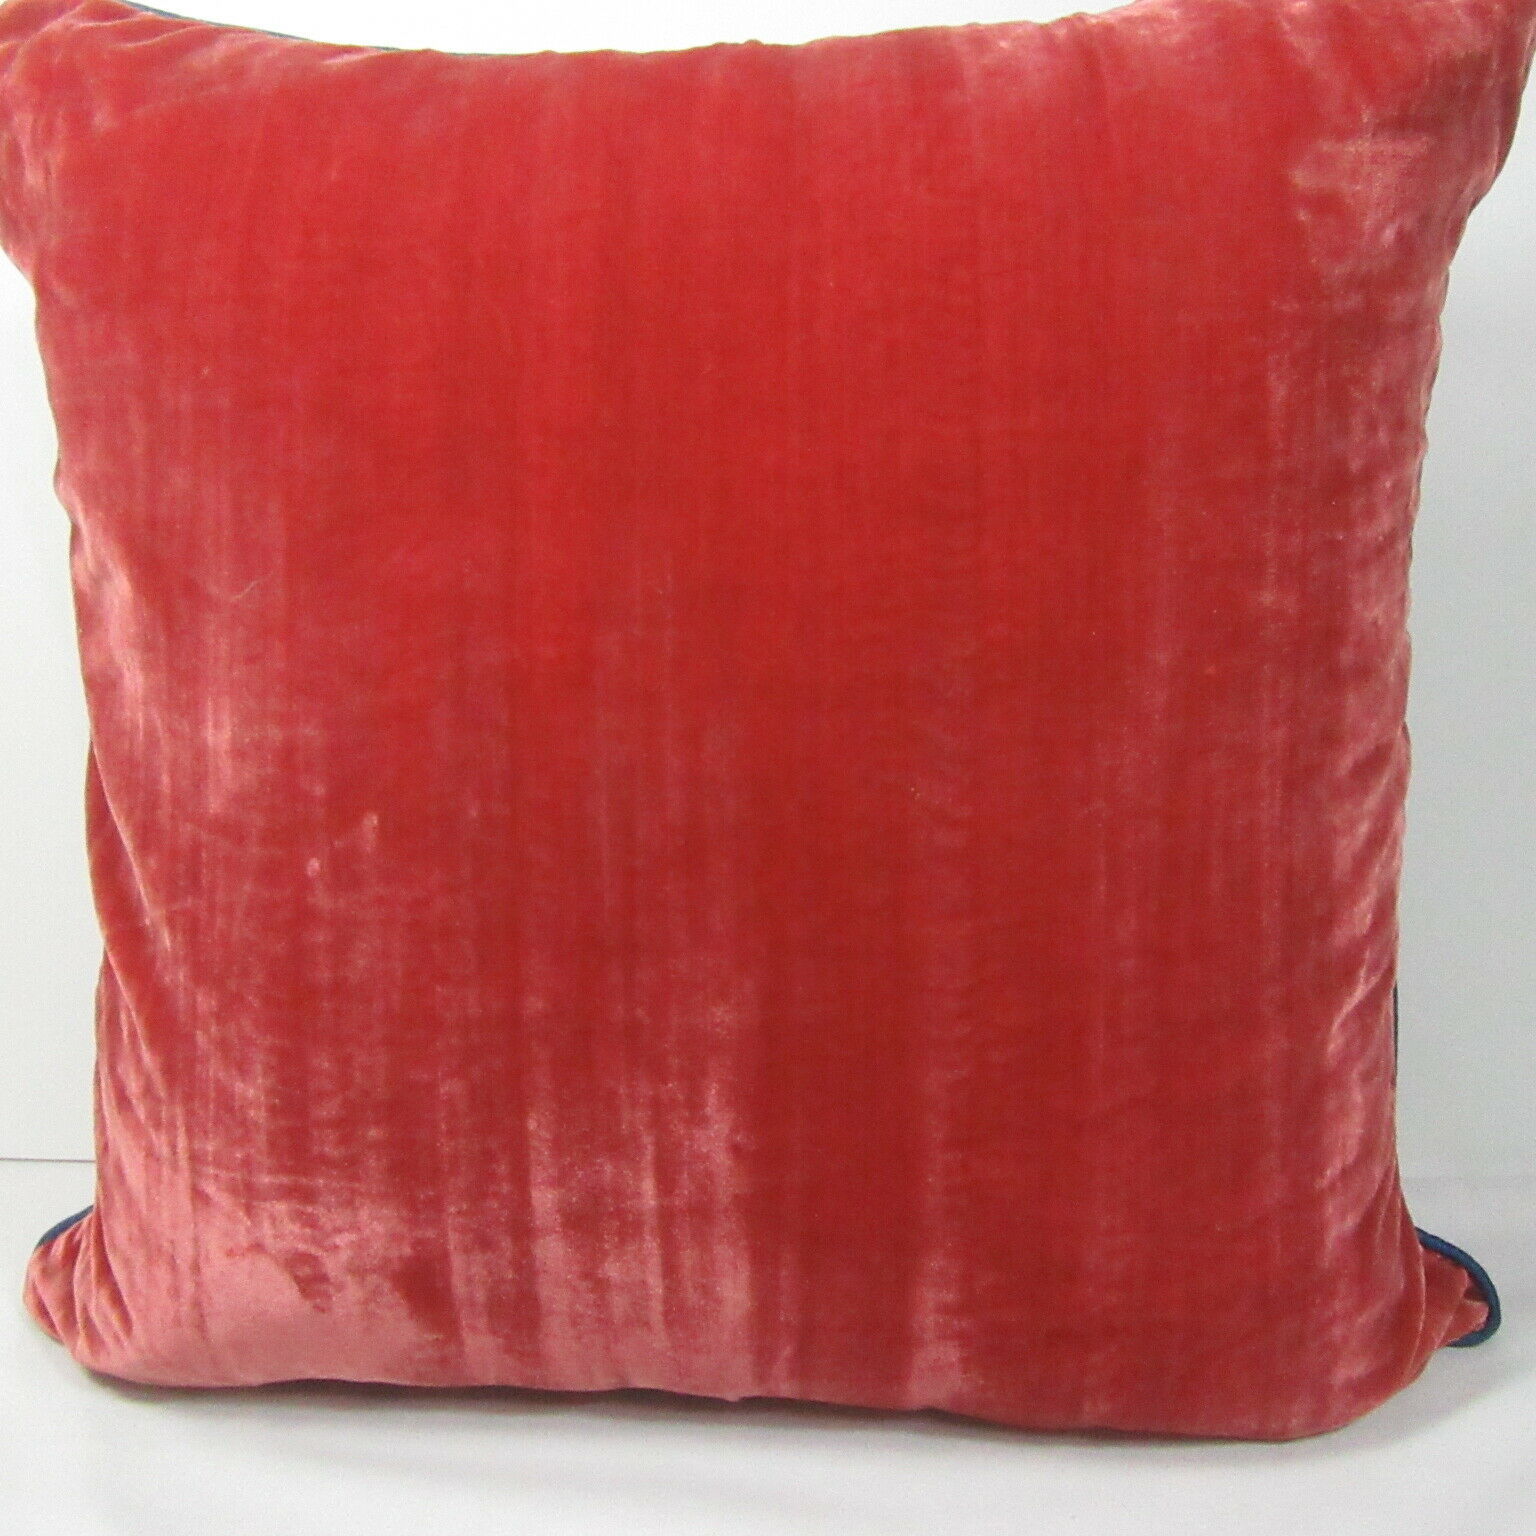 Tracy Porter Poetic Wanderlust Red Velvet 20-inch Square Decorative Pillow - $50.00